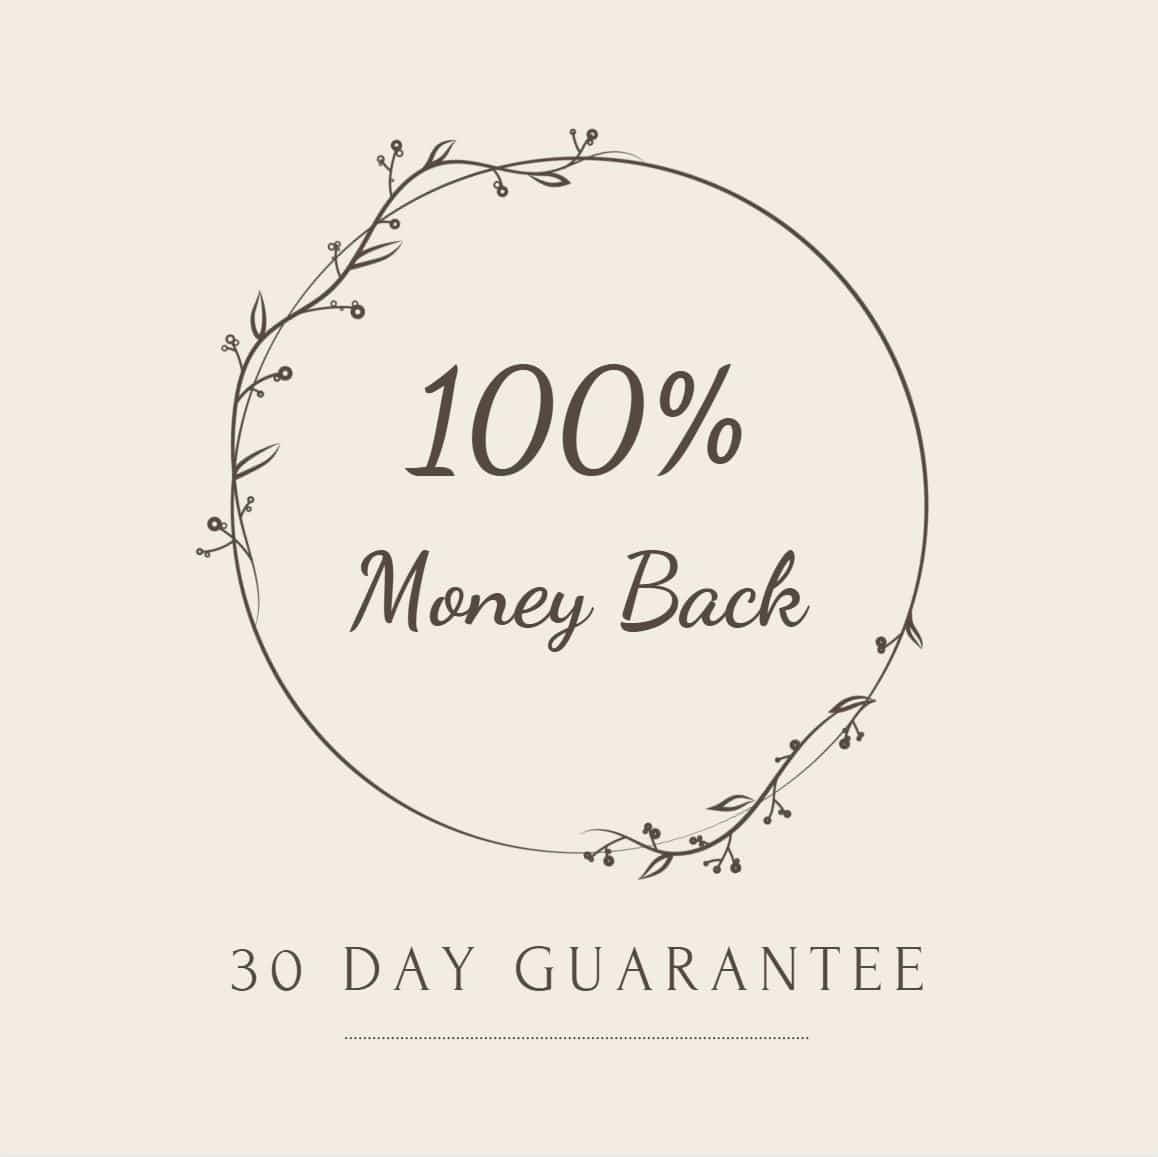 100% money back - 30 day guarantee